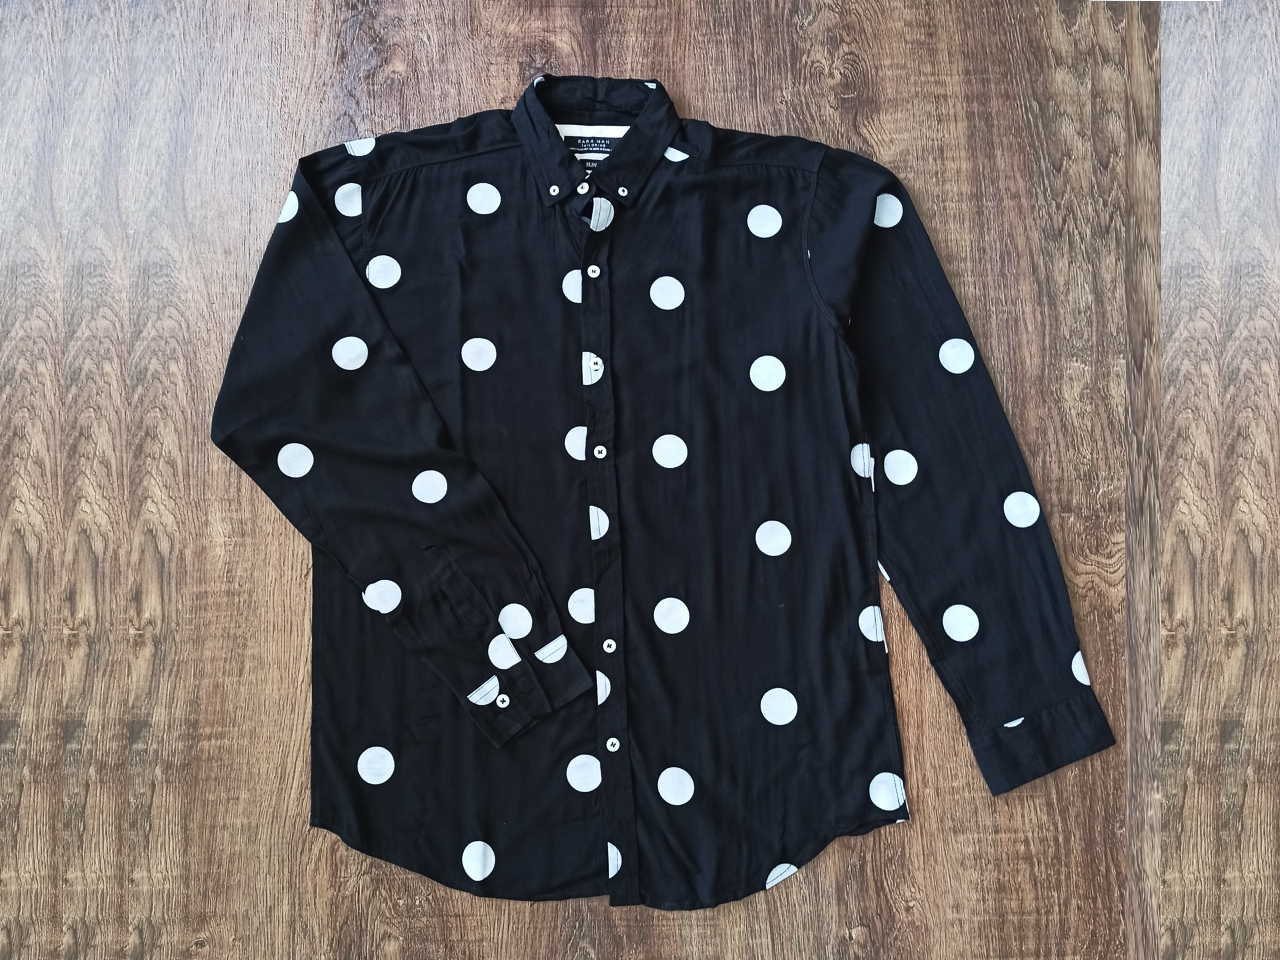 K Club - Zara Man Casual Shirt (Black Polka Dot)